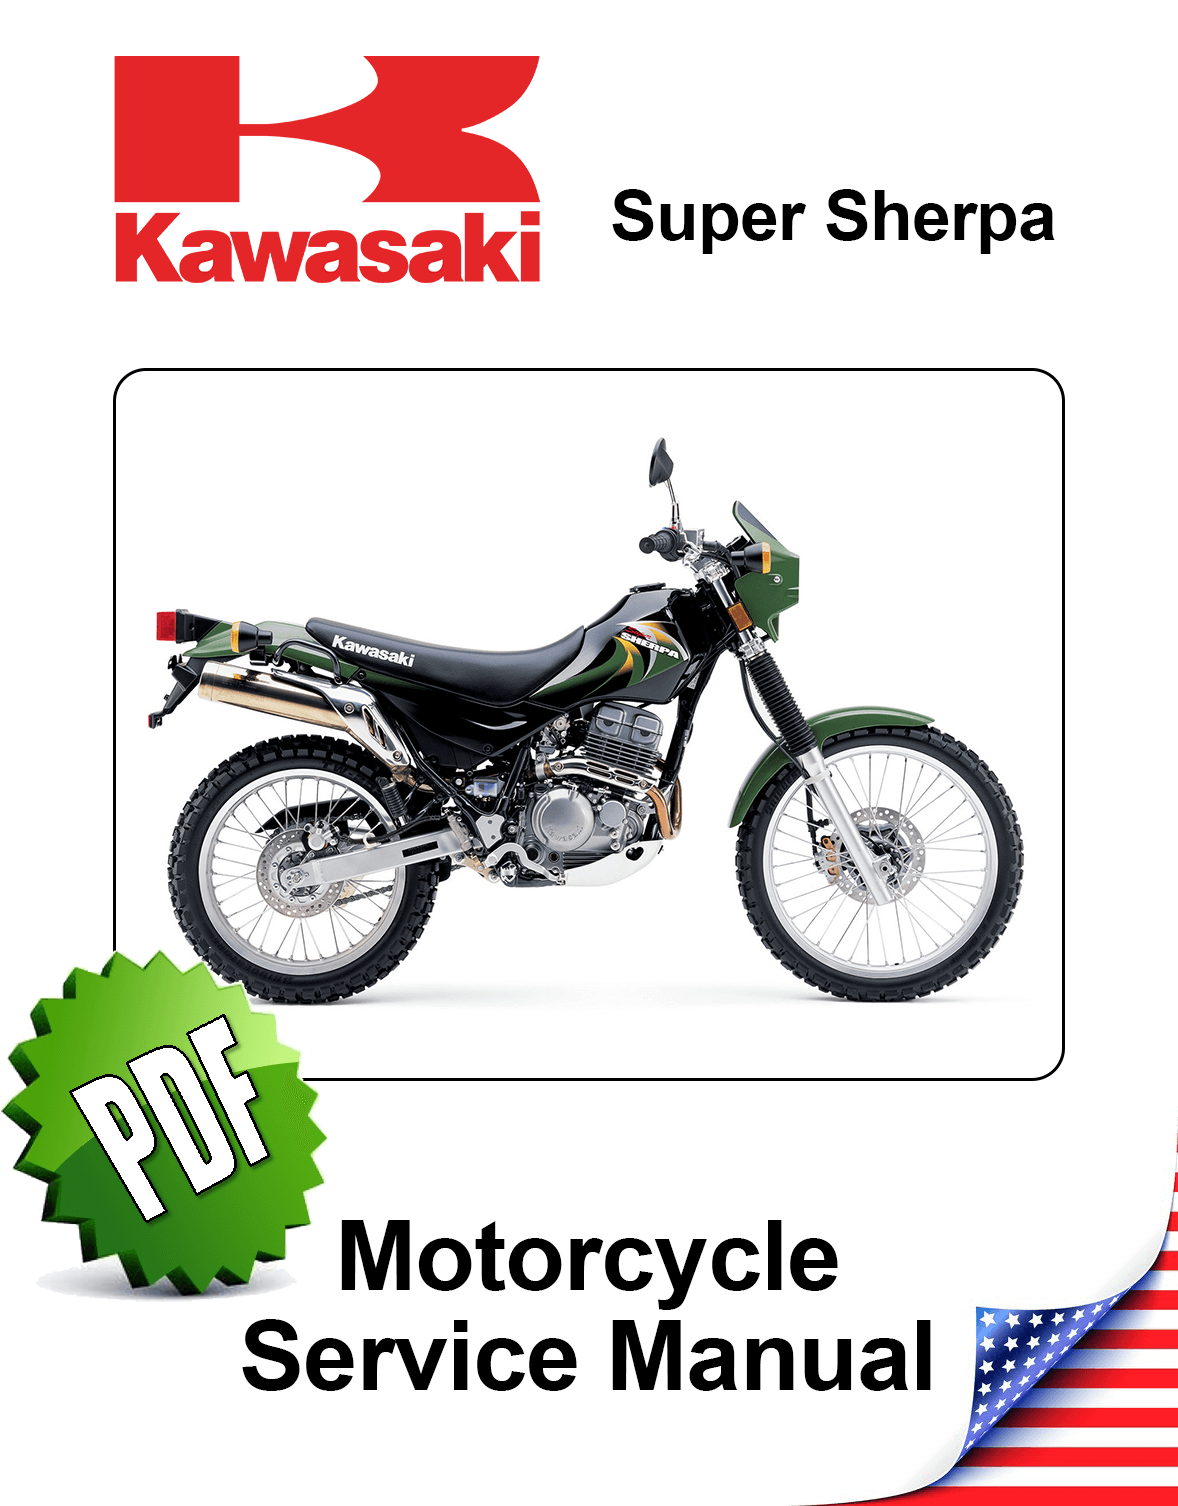 Kawasaki KL250G Super Sherpa Service Manual 1997 to present PDF download